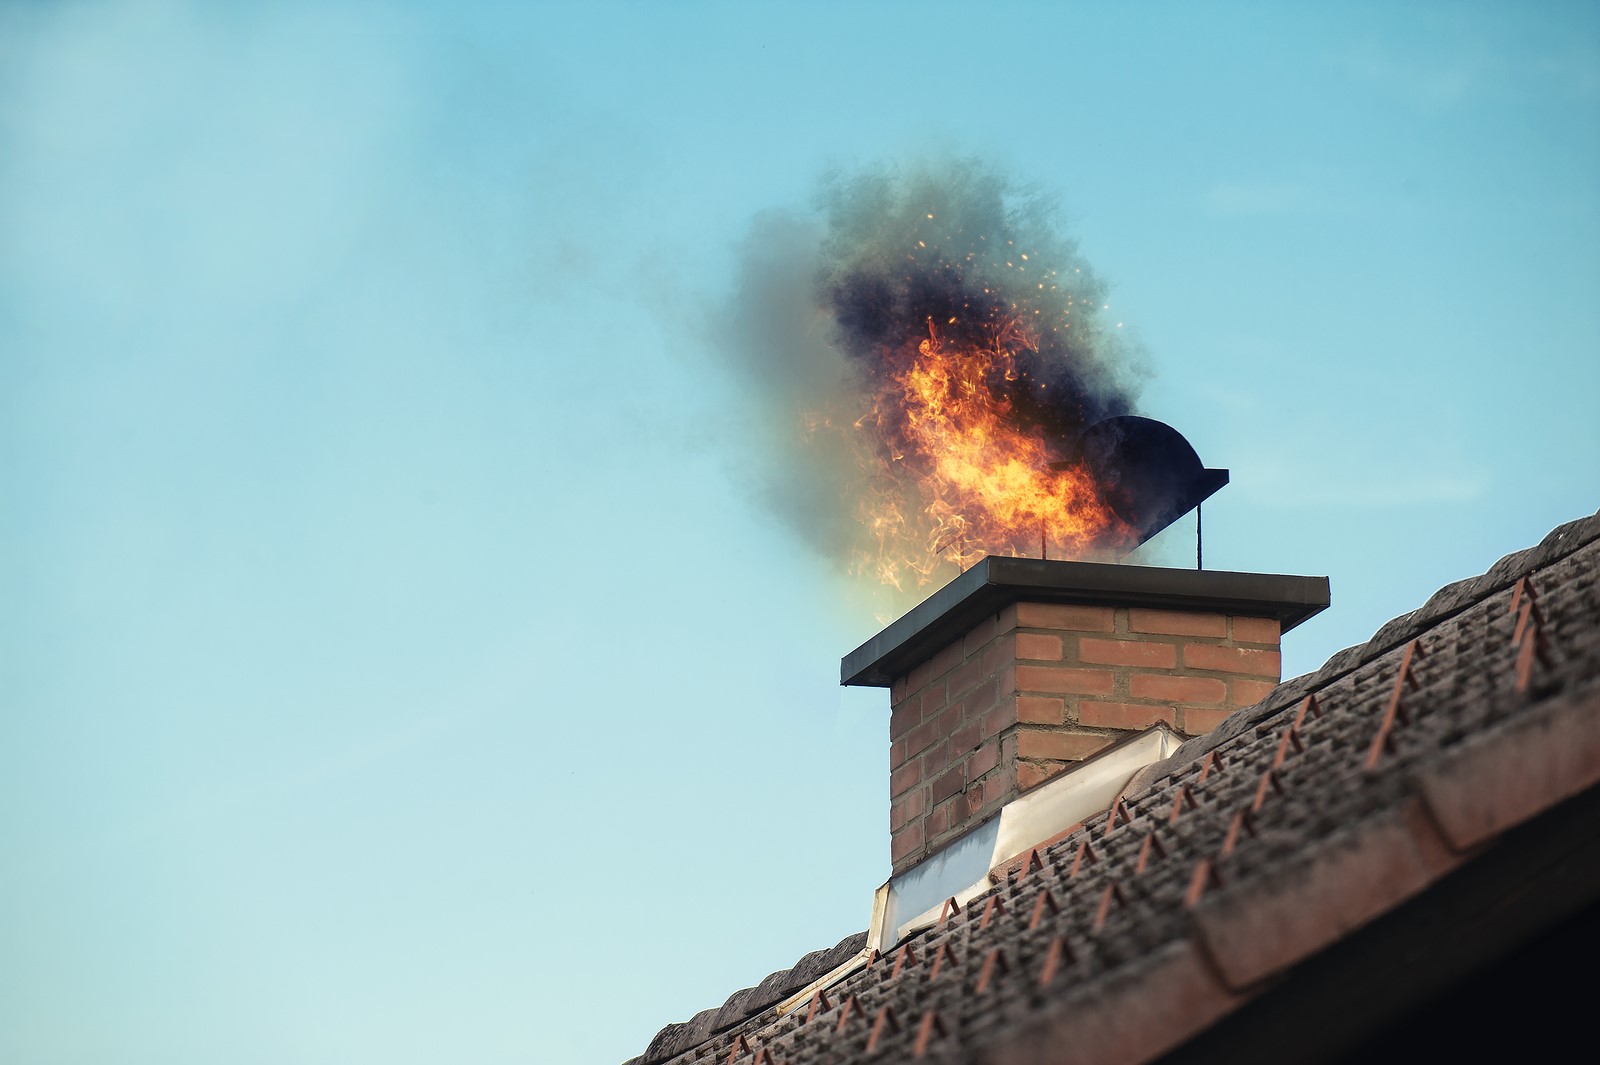 chimney repair services